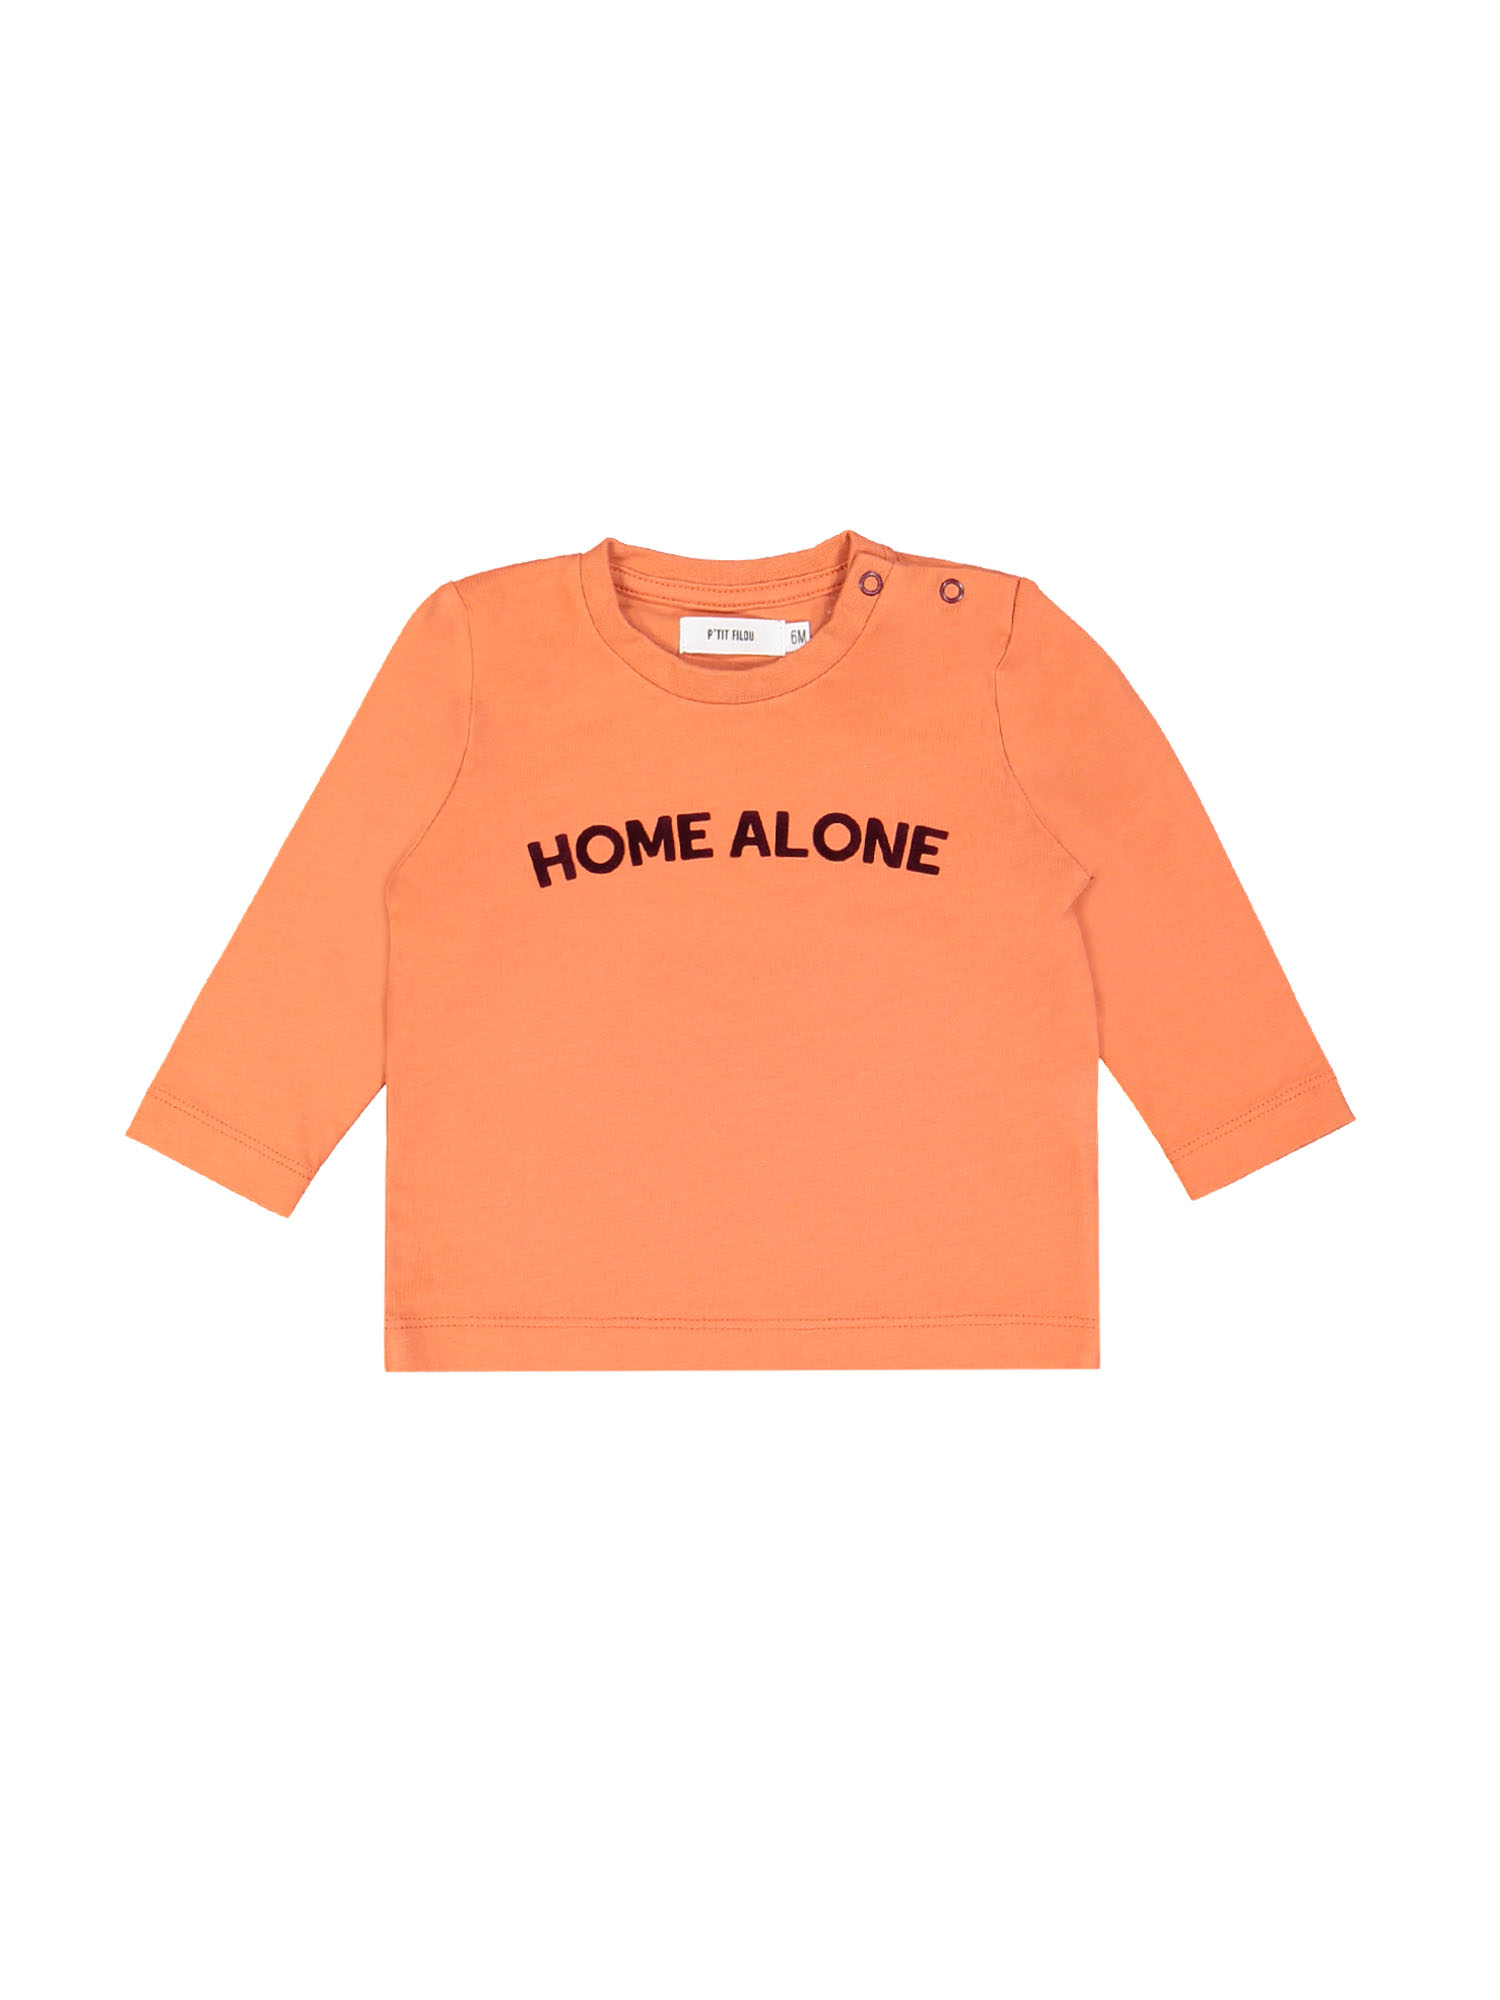 T-shirt mini home alone oranje 03m